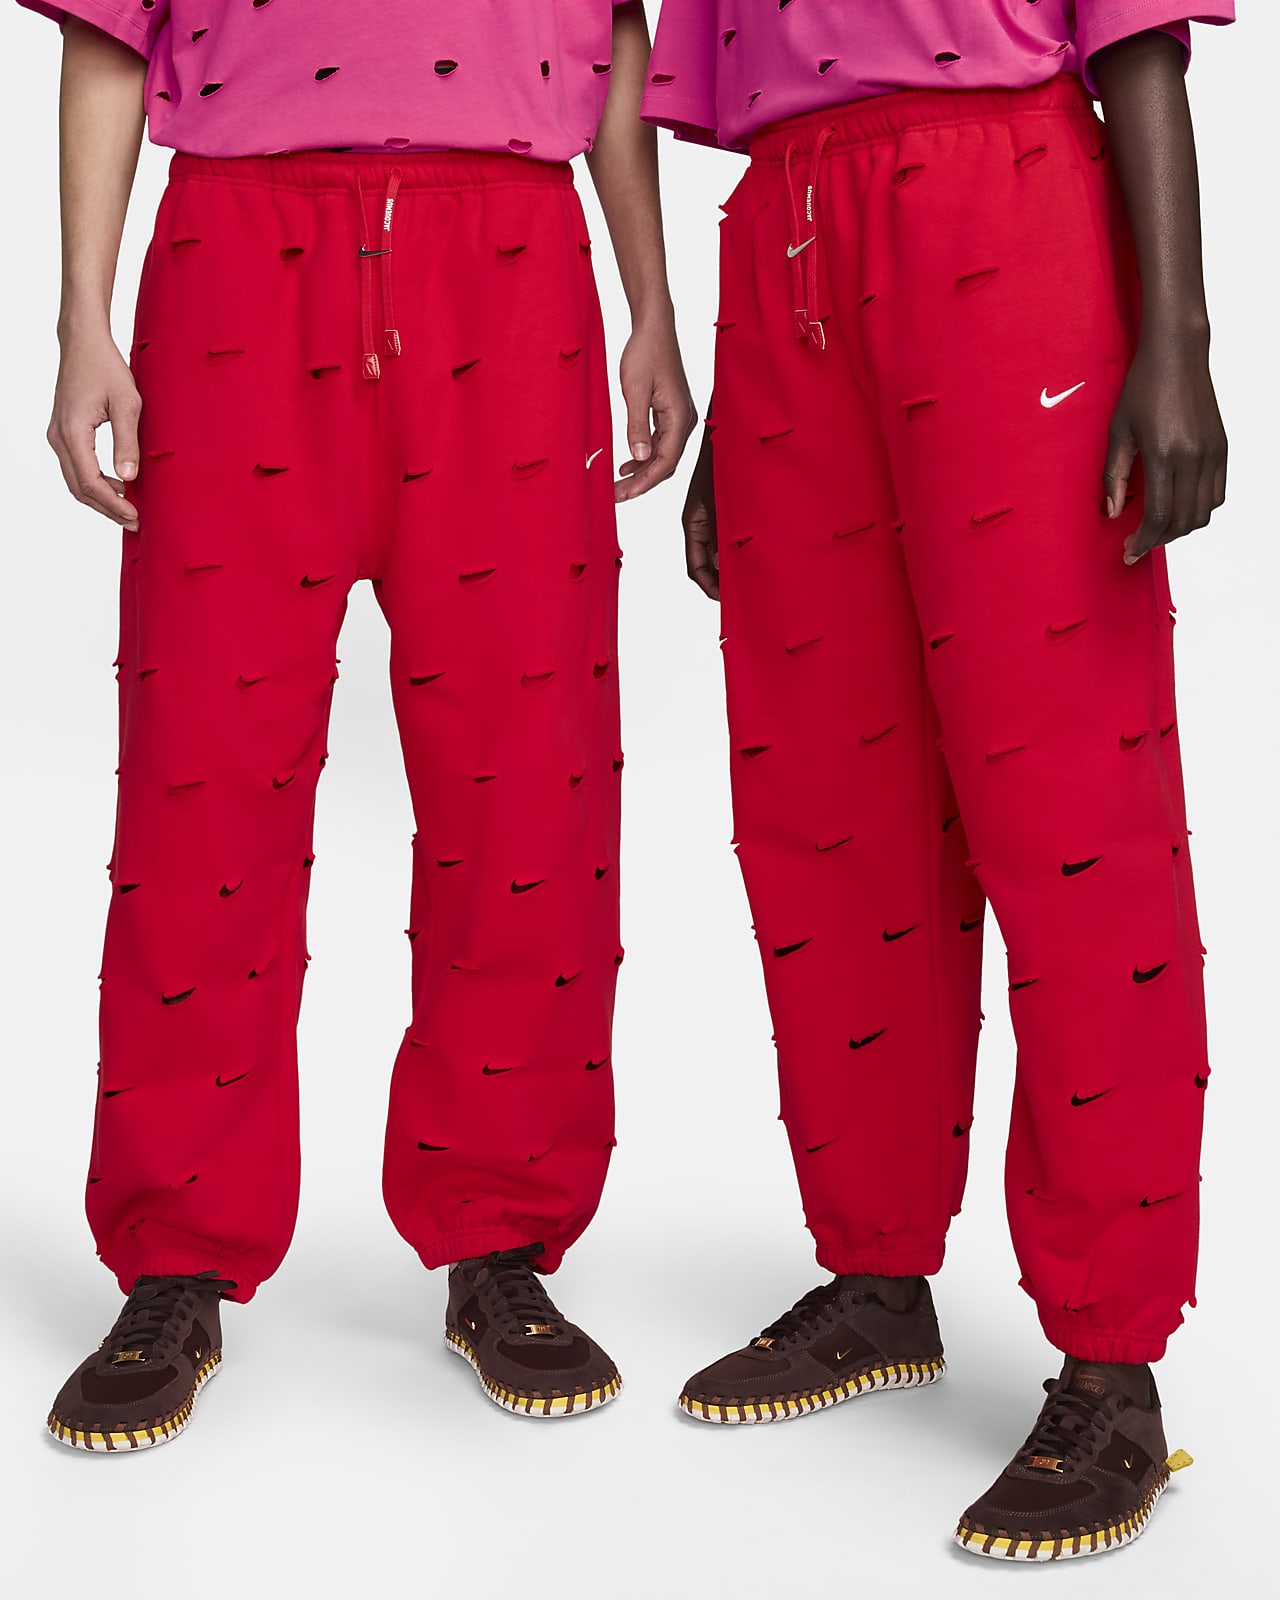 Pants Swoosh Nike x Jacquemus